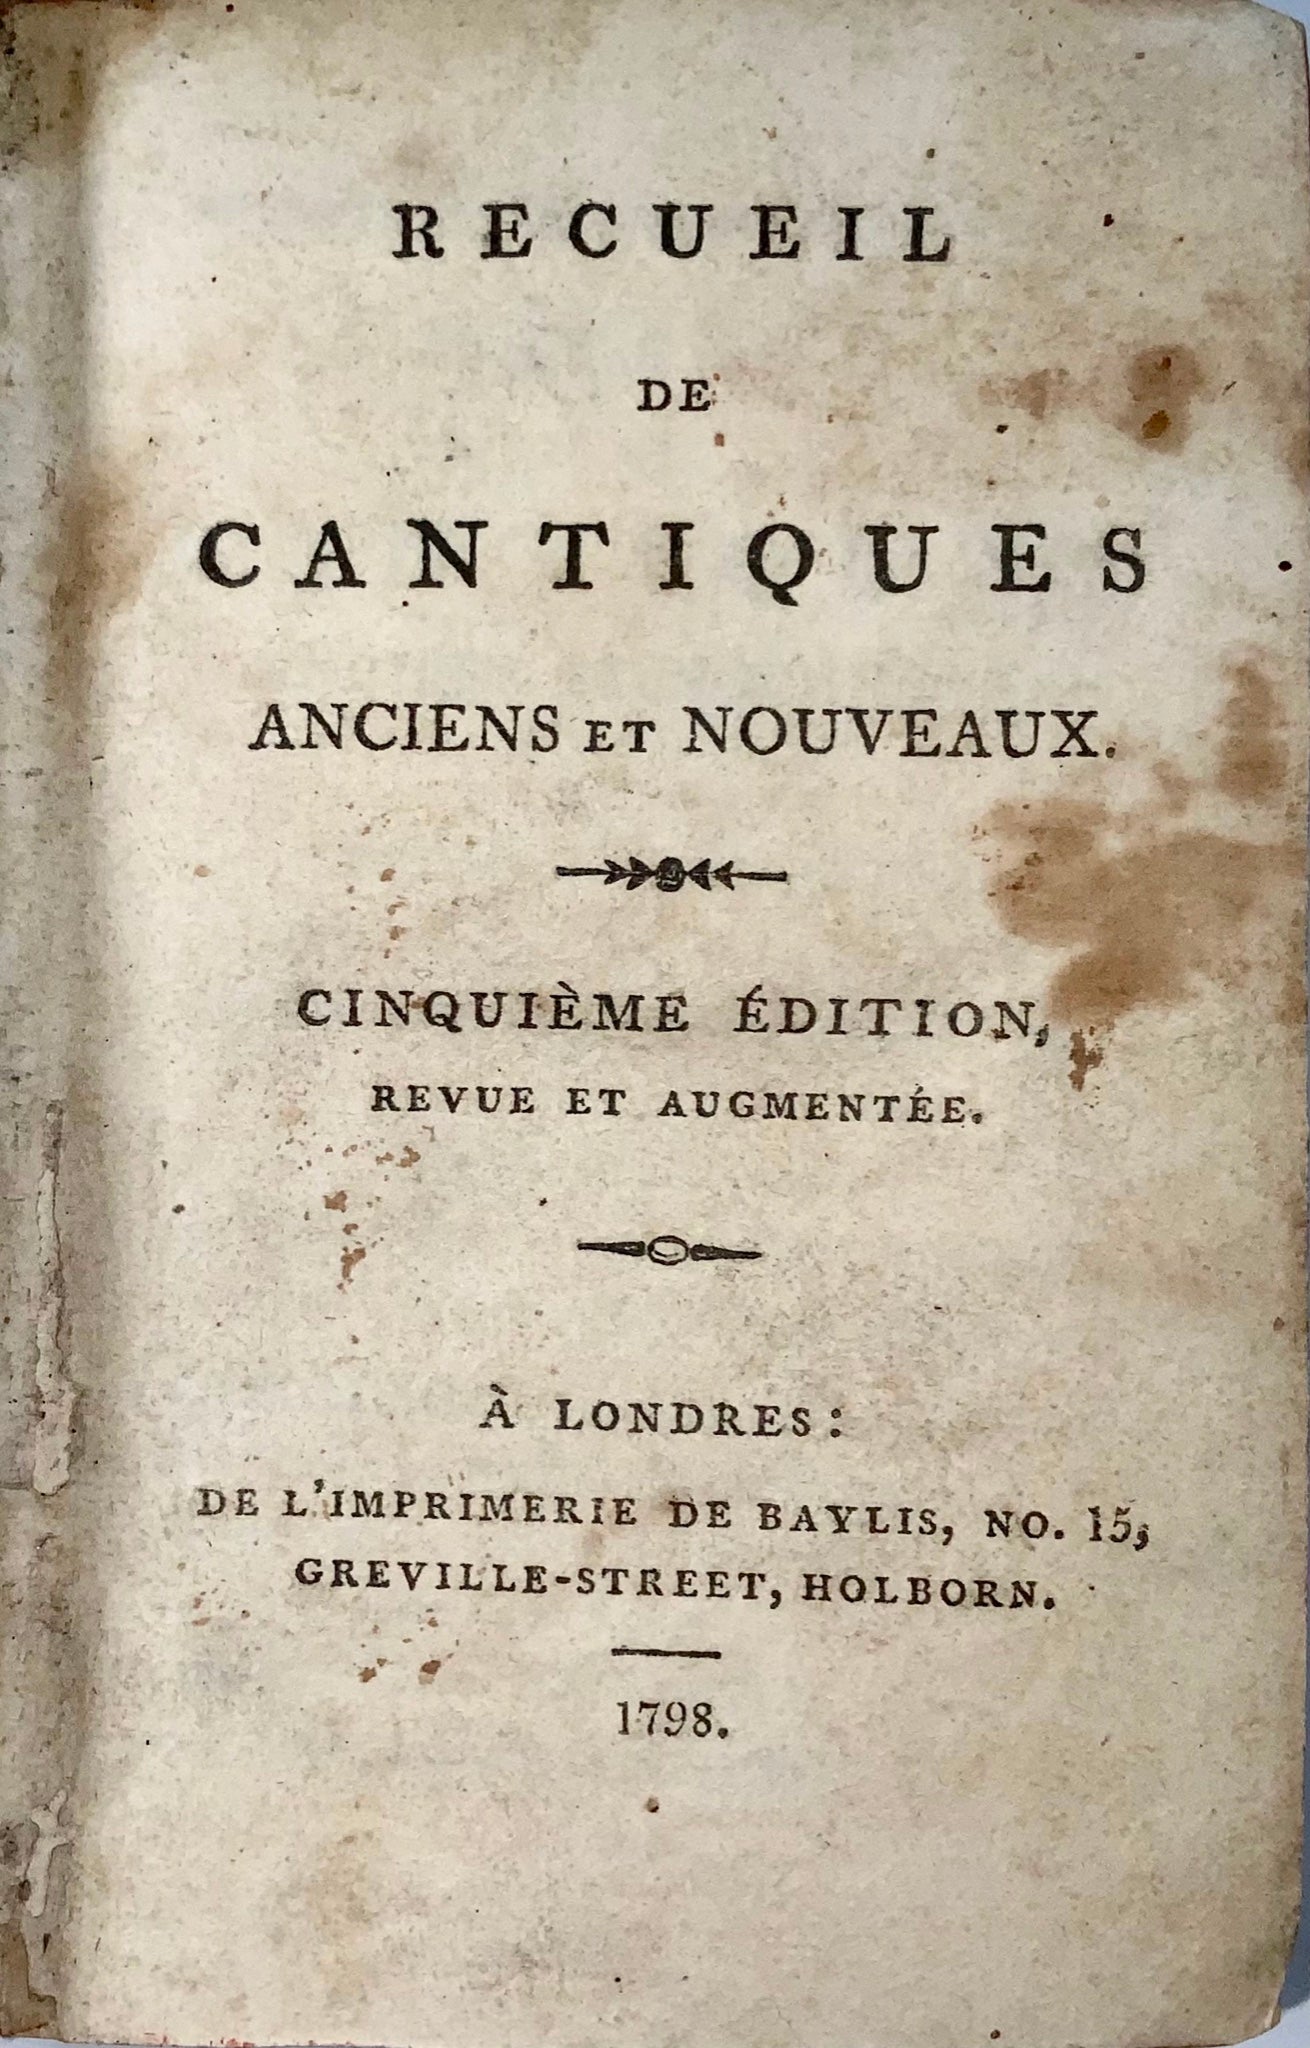 1798 Christian Harmony, Receuil de cantiques, London imprint, book